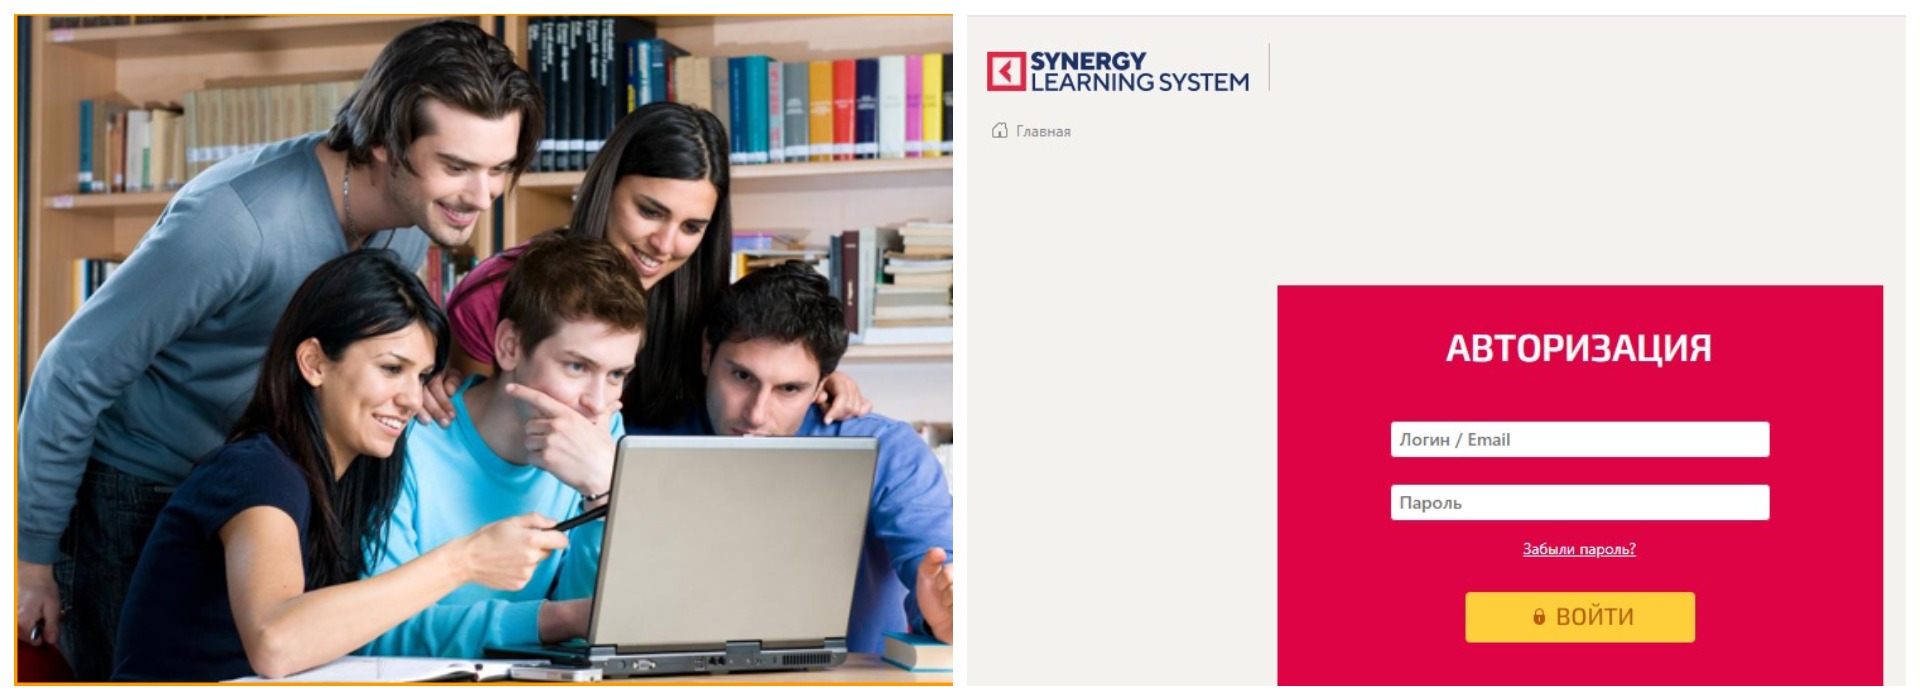 Synergy learning system - личный кабинет студента вход